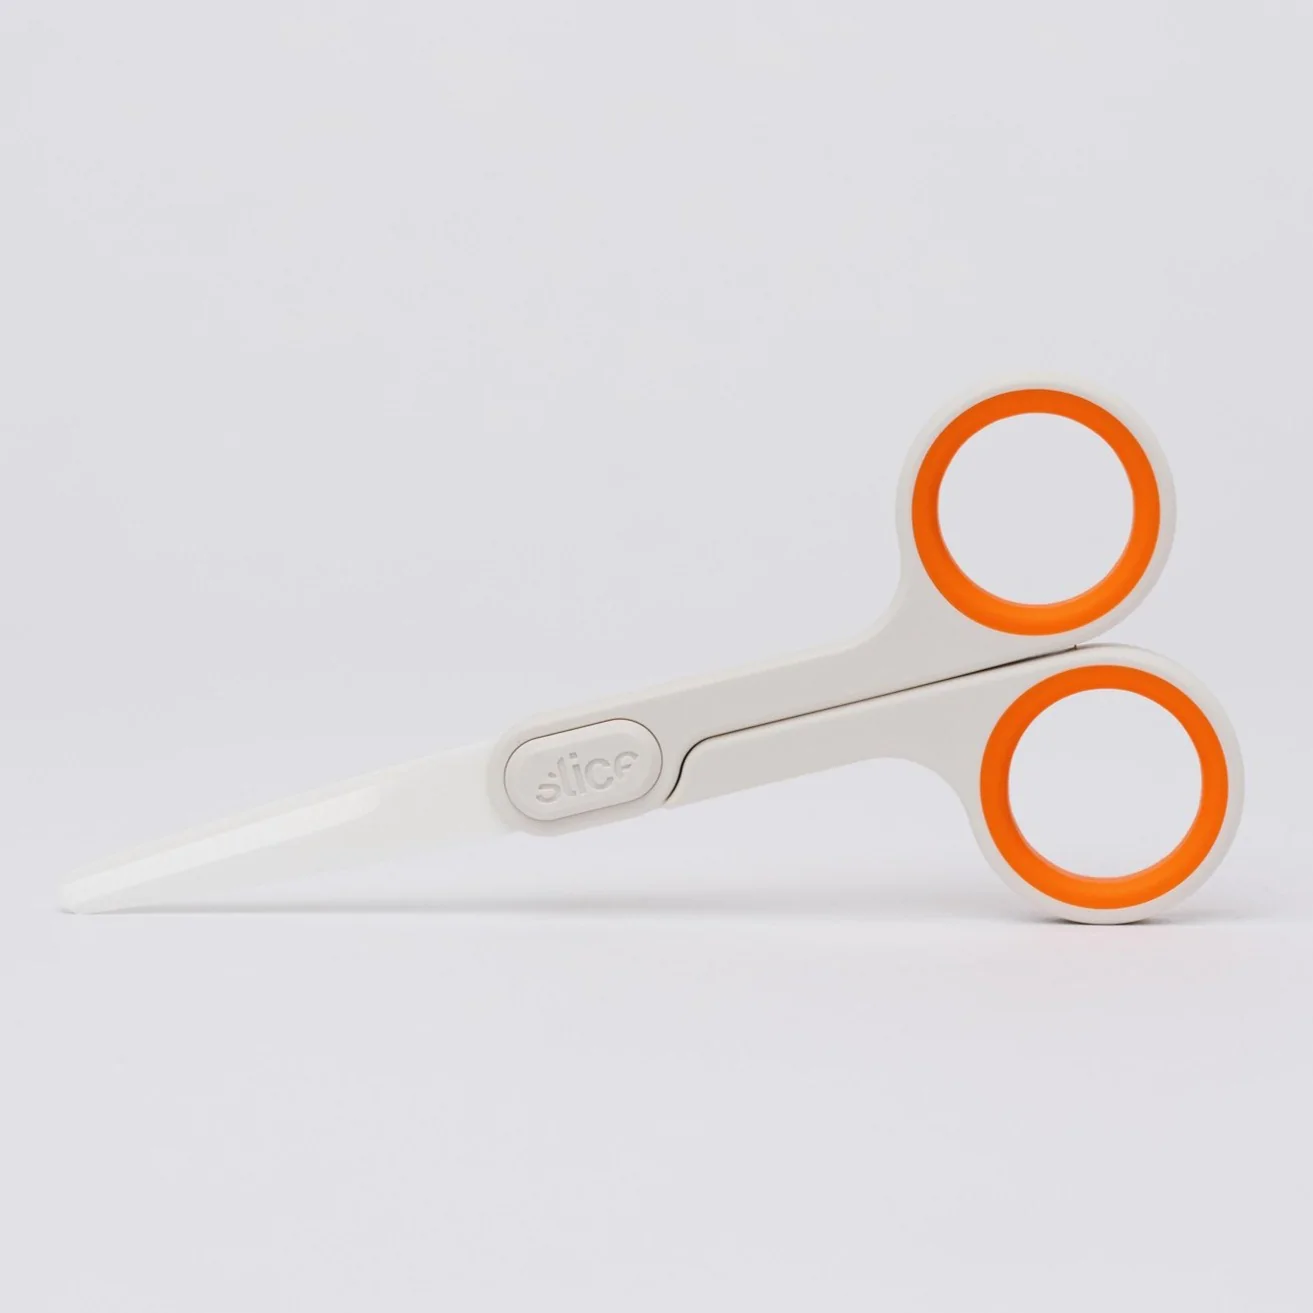 Slice 10544 Small Scissors